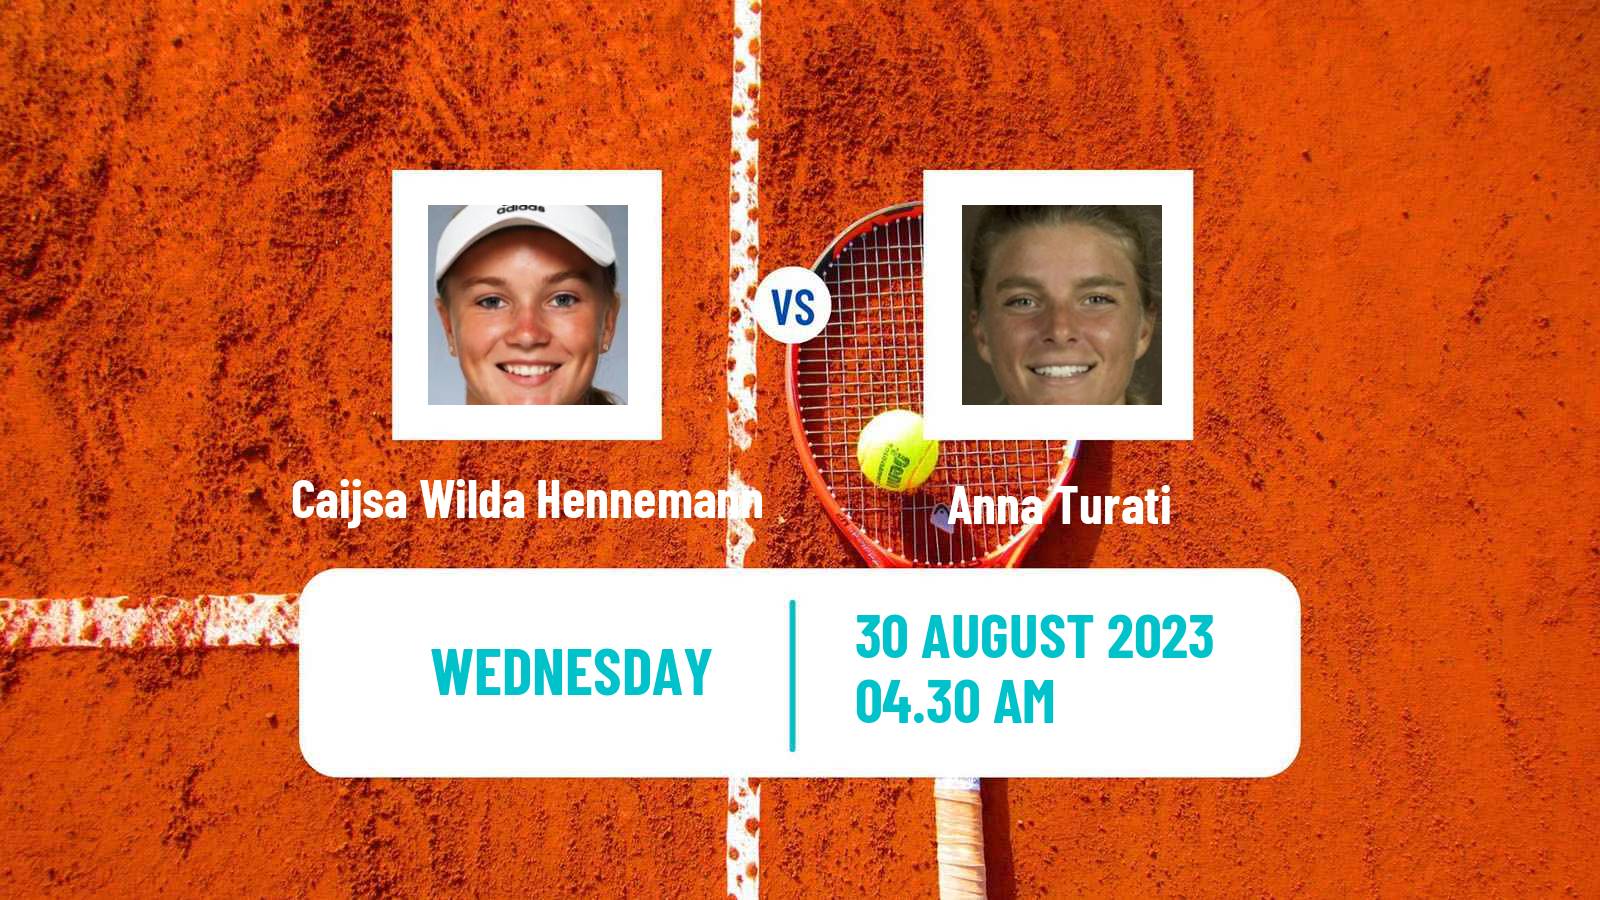 Tennis ITF W25 Trieste Women Caijsa Wilda Hennemann - Anna Turati